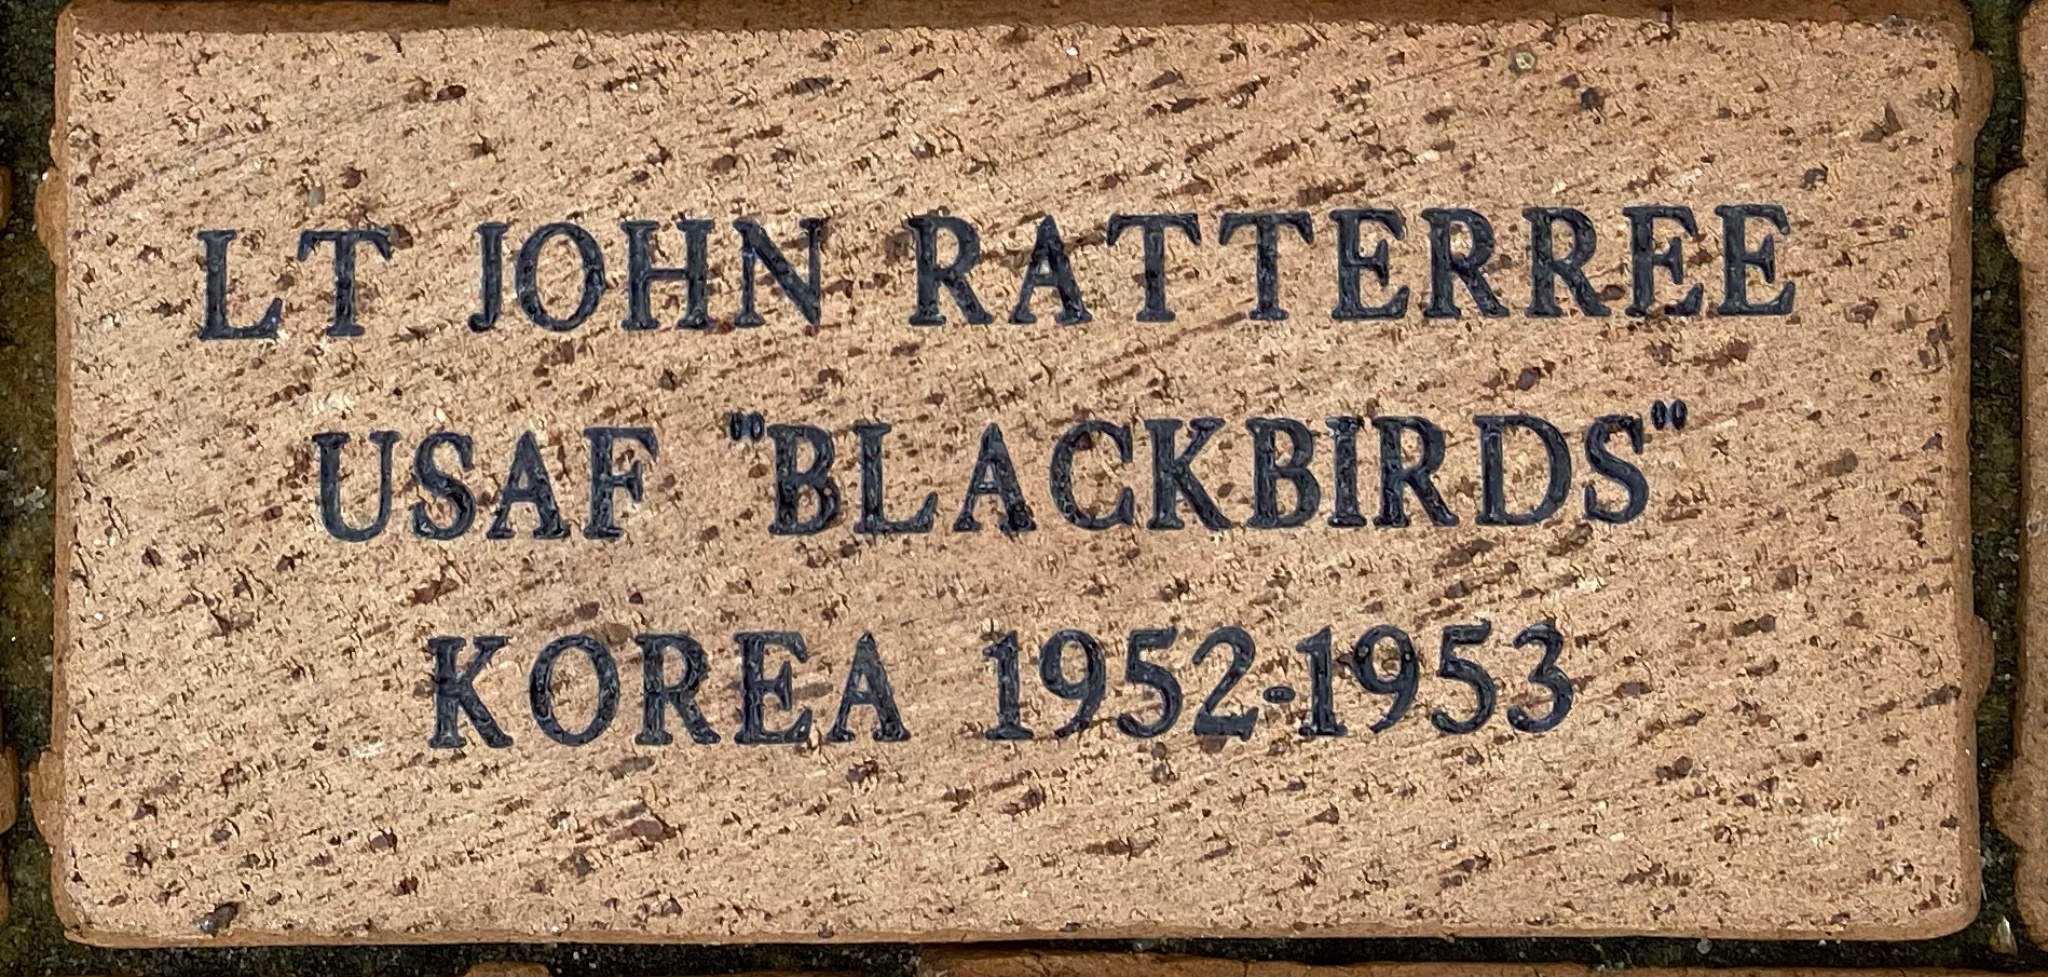 LT JOHN RATTERREE USAF ”BLACKBIRDS” KOREA 1952-1953